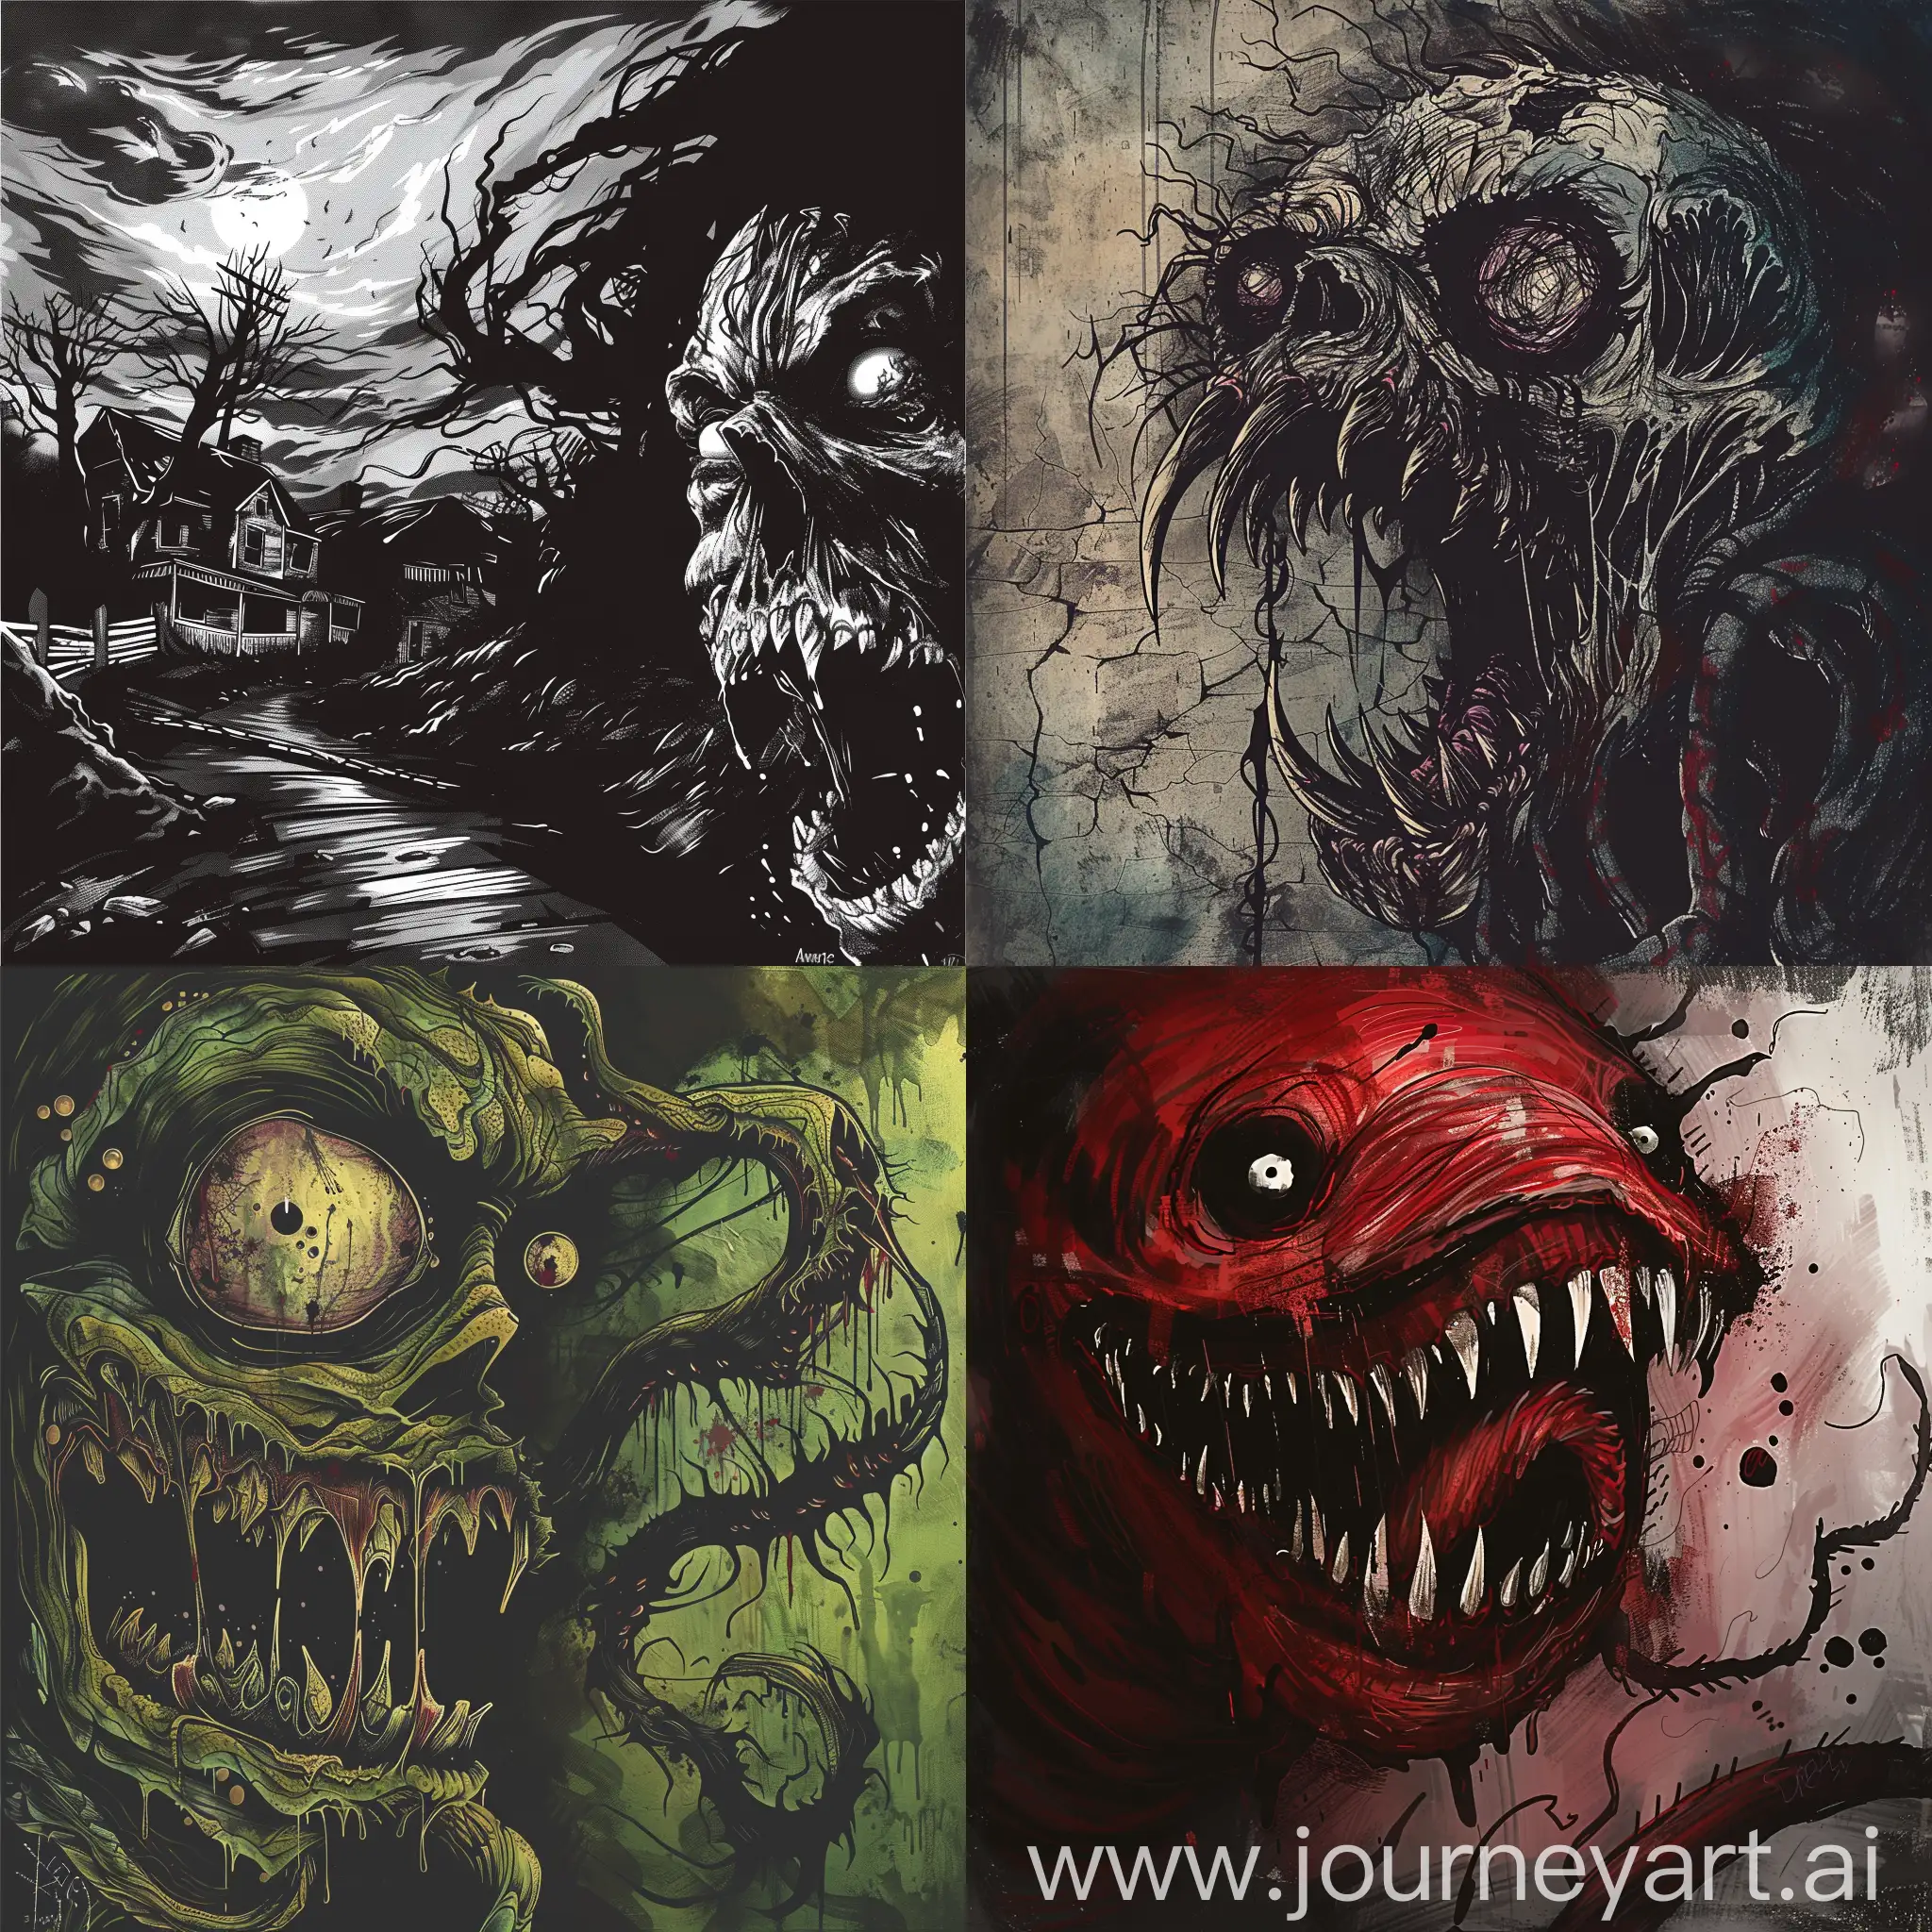 Amateur artwork, amateur digital artwork, horror art, Homemade artwork, homemade scary art, scary, mural, drawn with adobe illustrator
